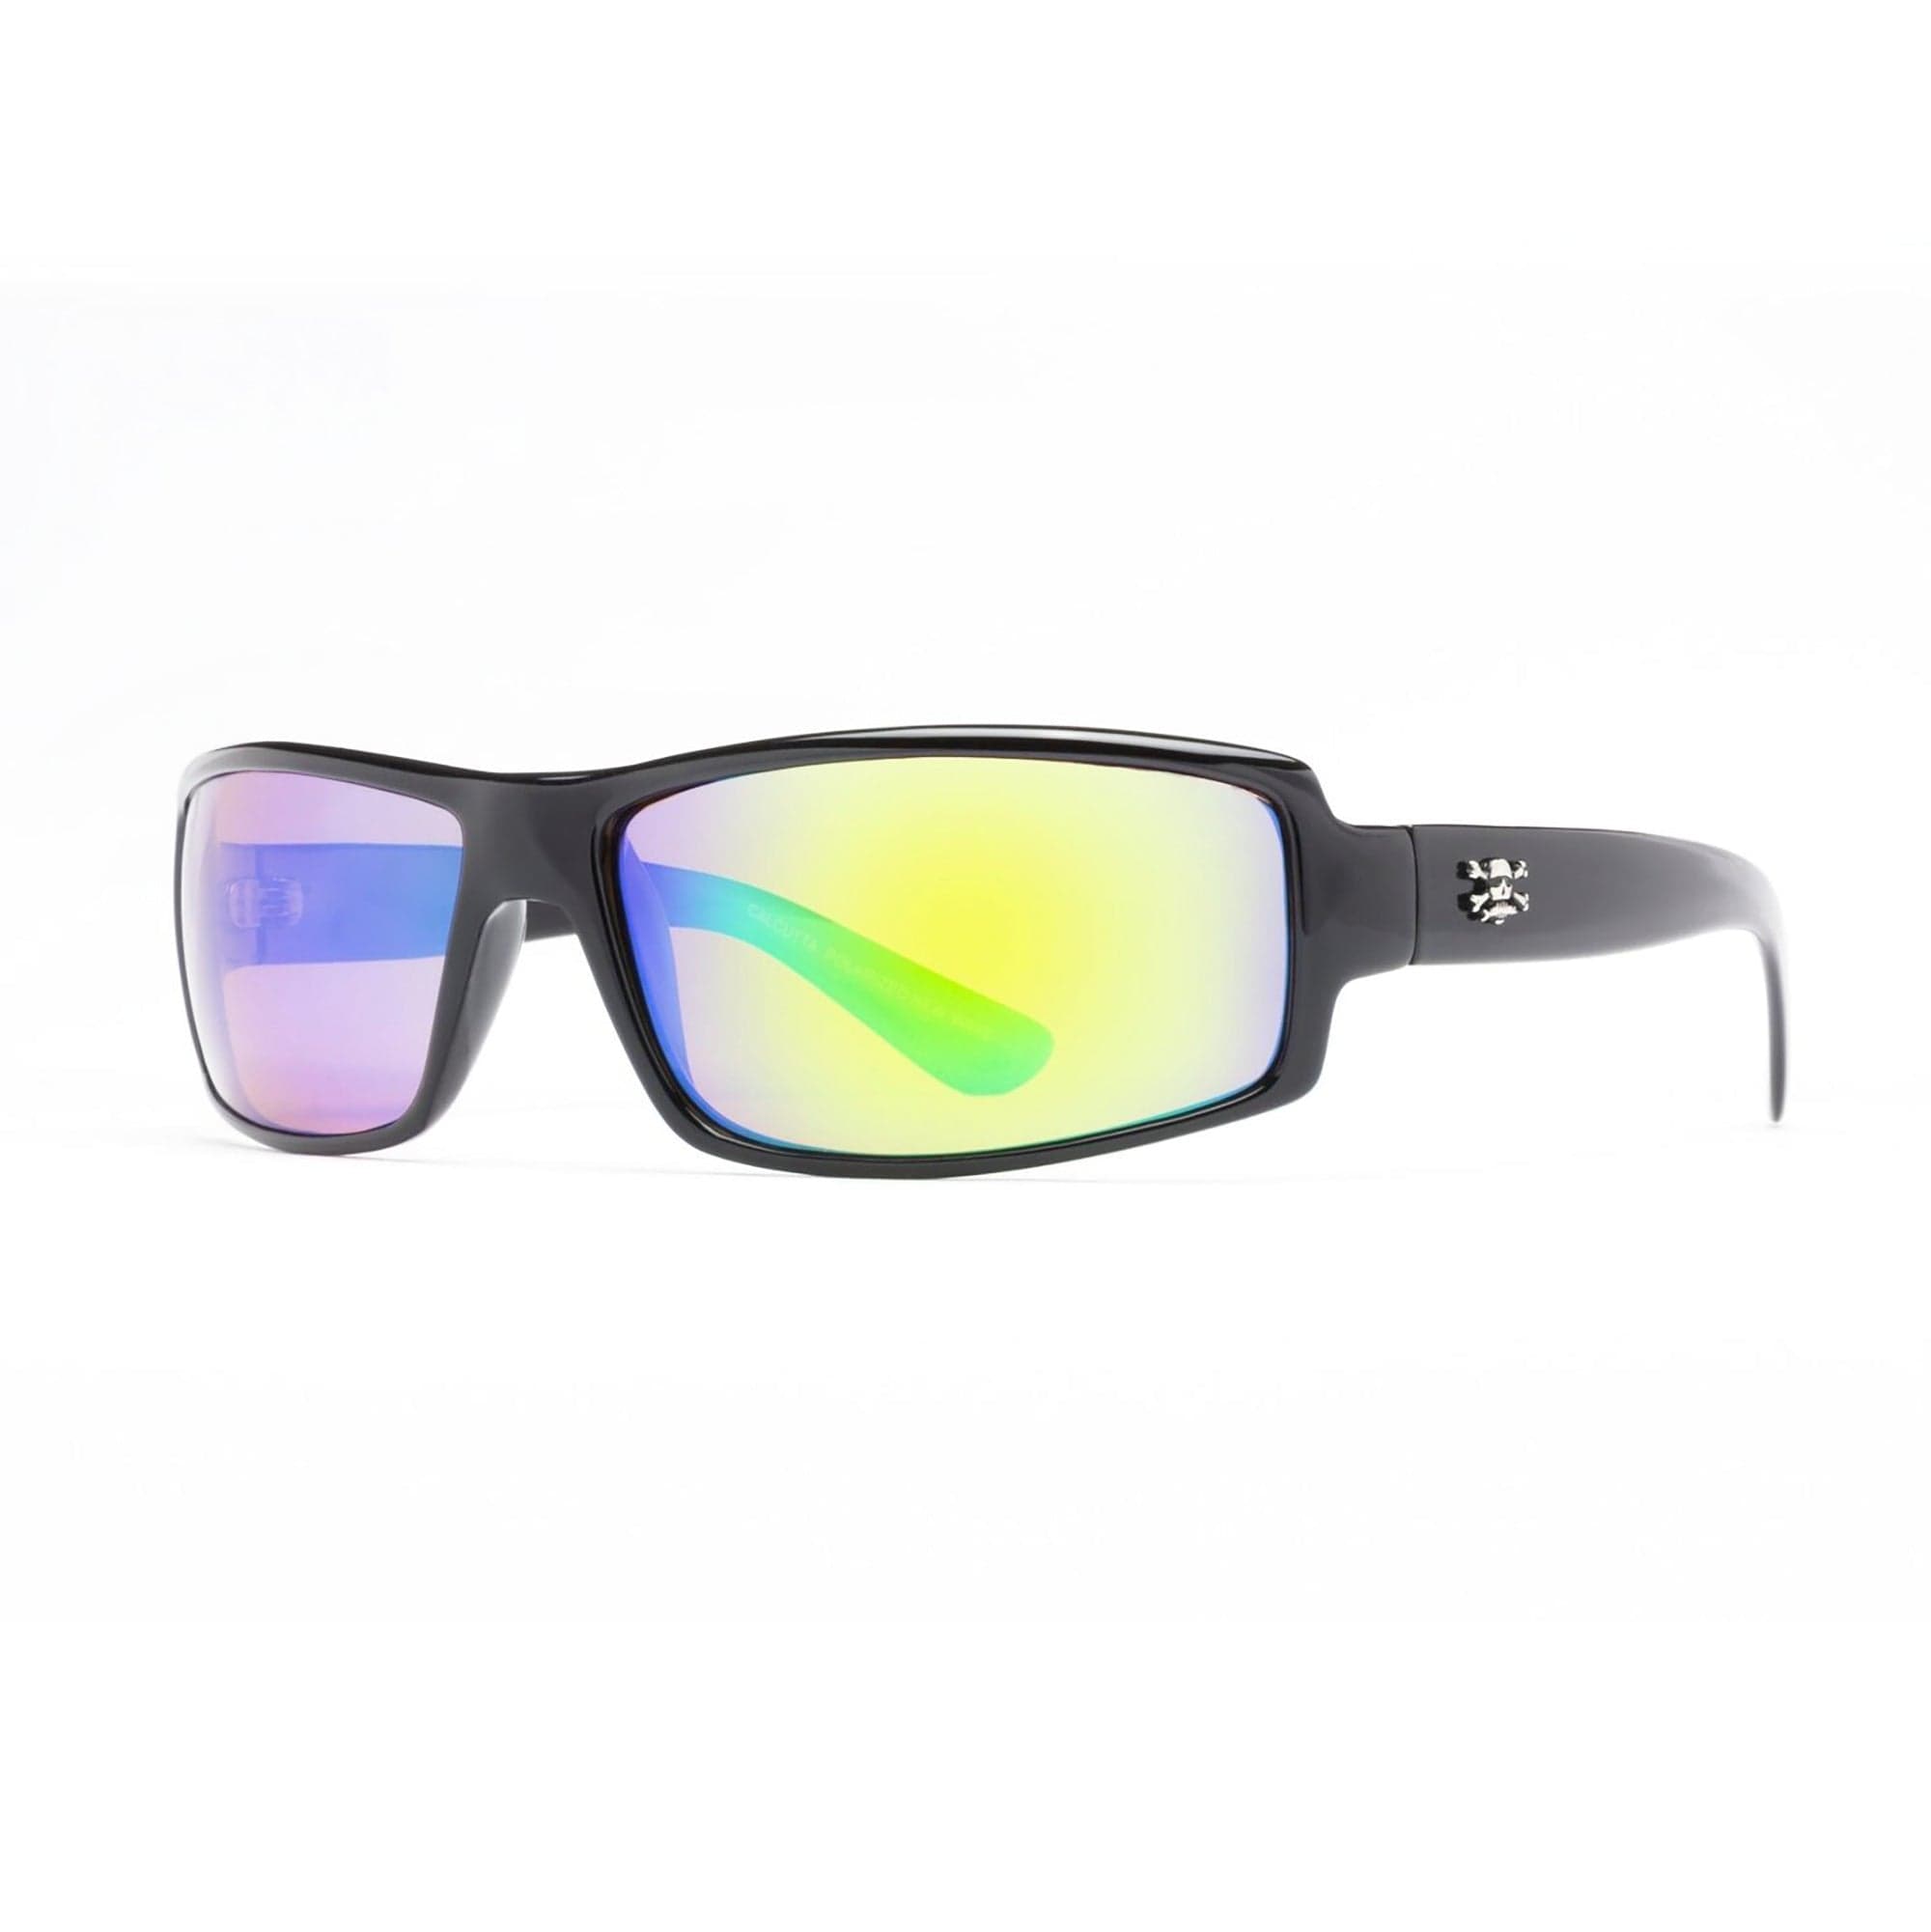 New Wave Sunglasses - Shiny Black , Green Mirror - Calcutta NW1GM